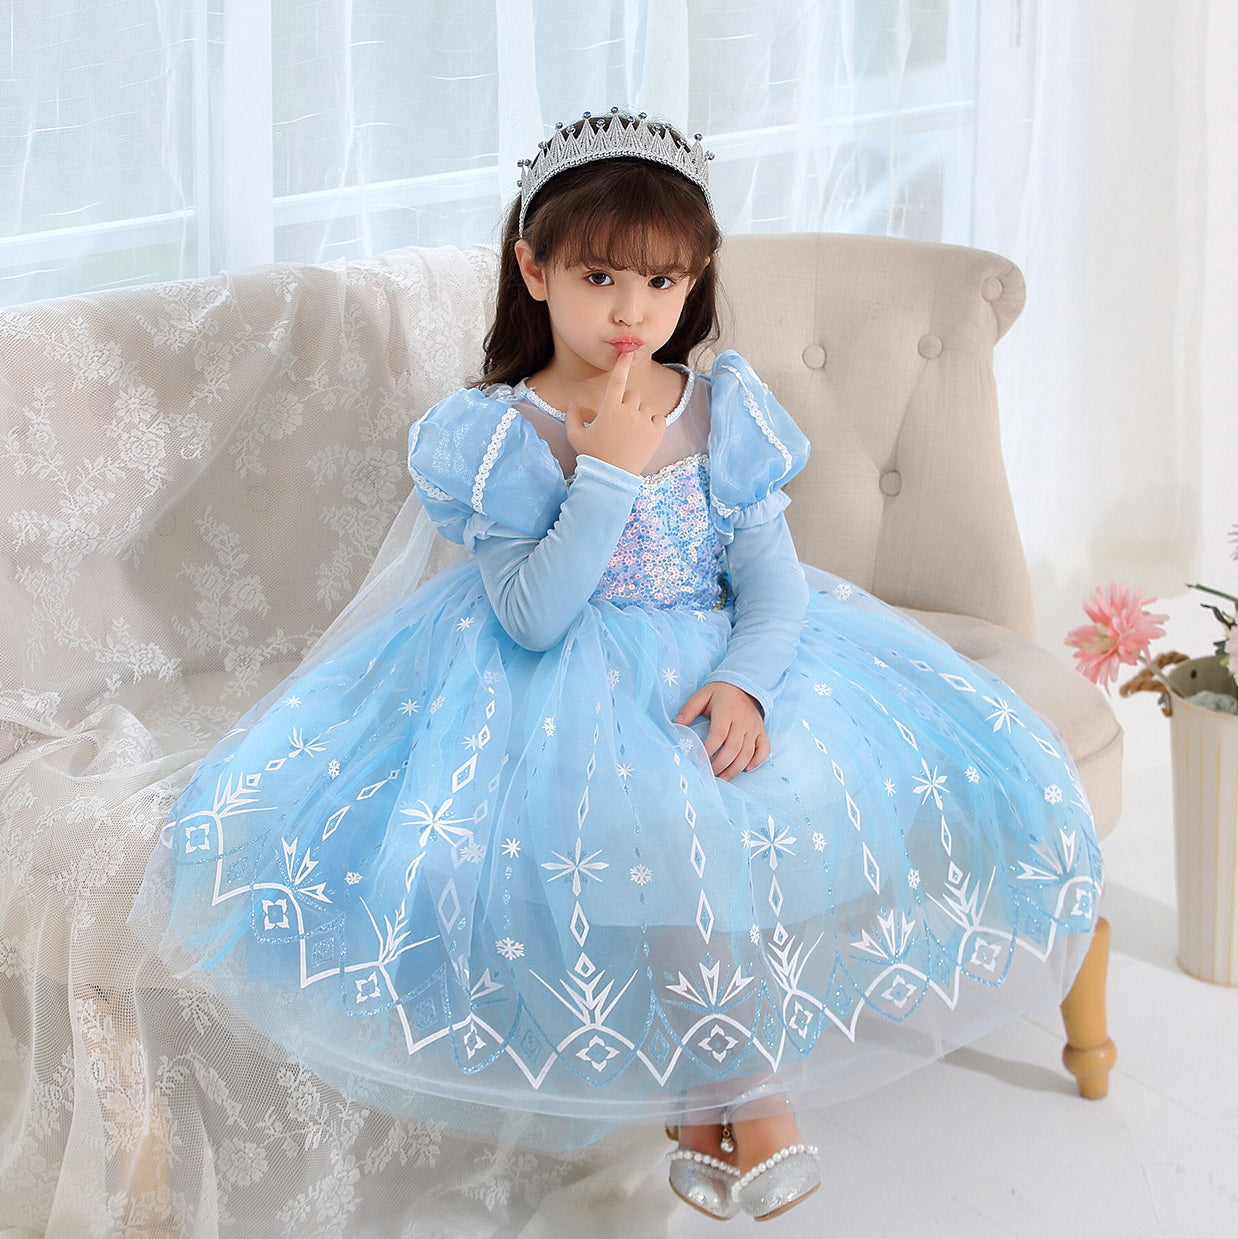 New Frozen 2 Elsa Dresses Princess Girl Costume Dresses Halloween Christmas Party Holiday